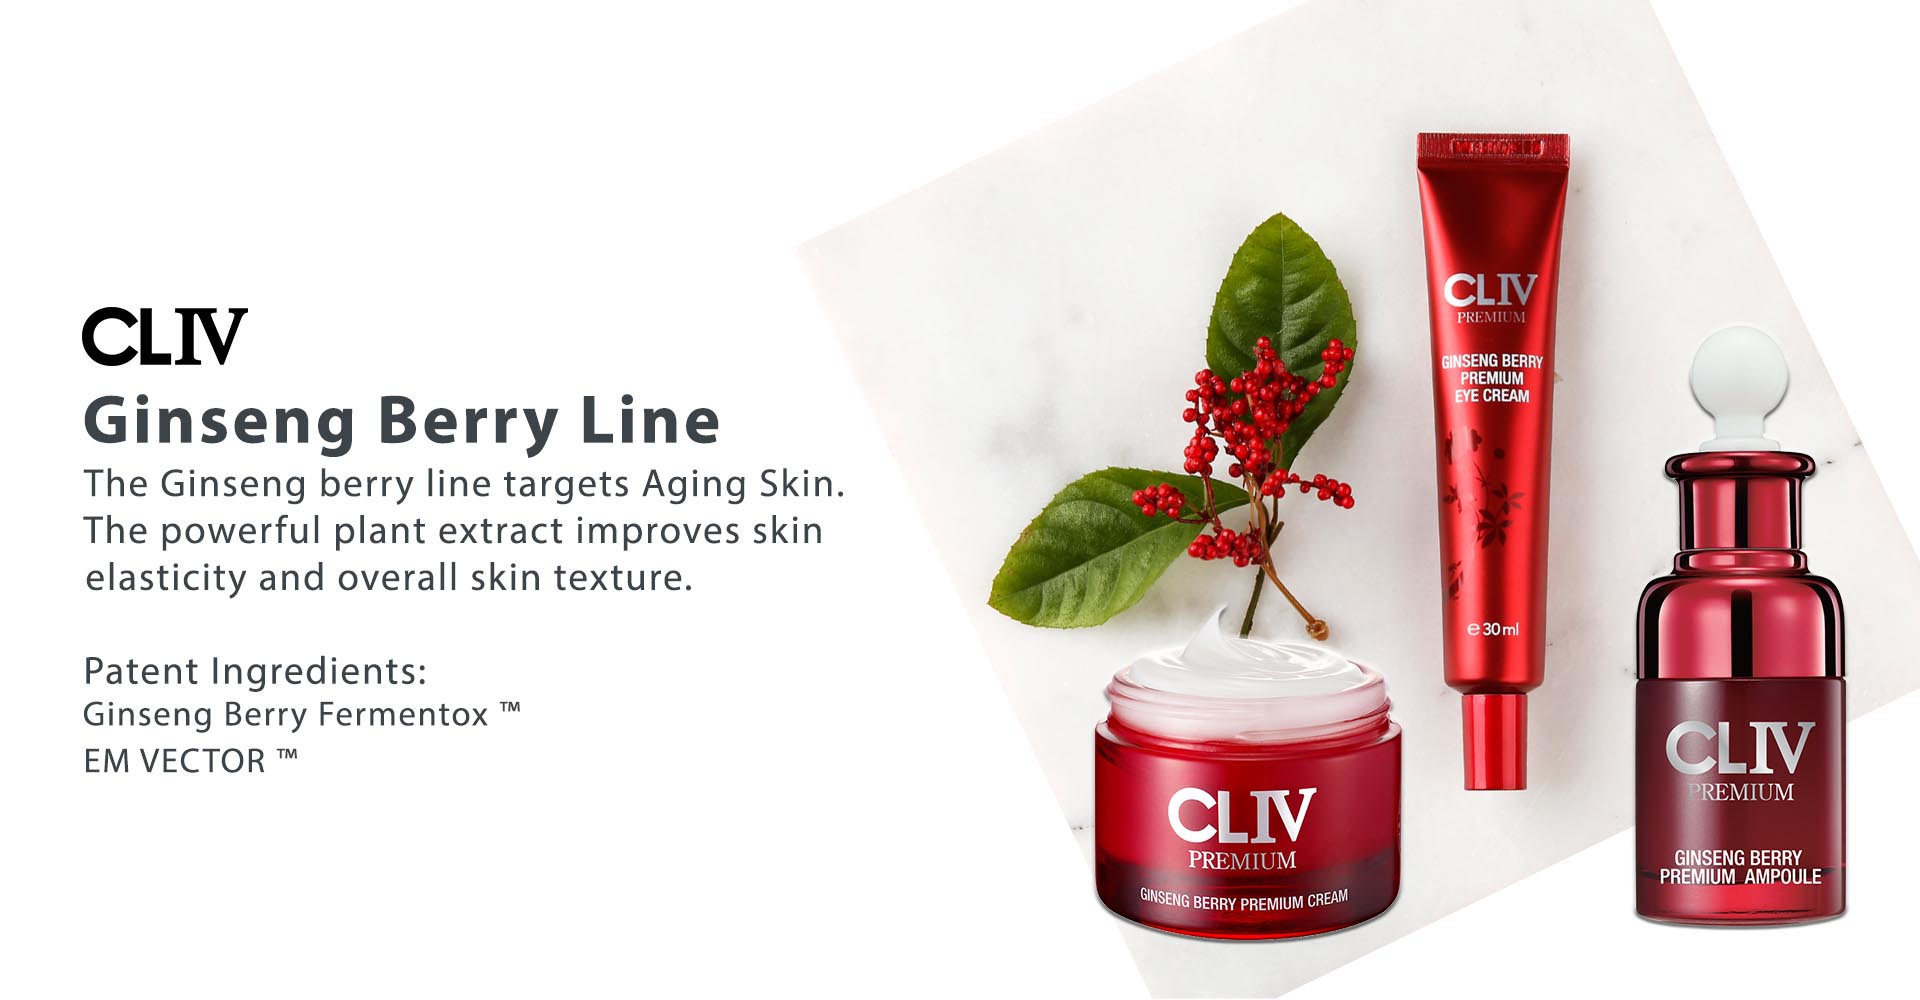 CLIV Ginseng Berry Premium Eye Cream. 